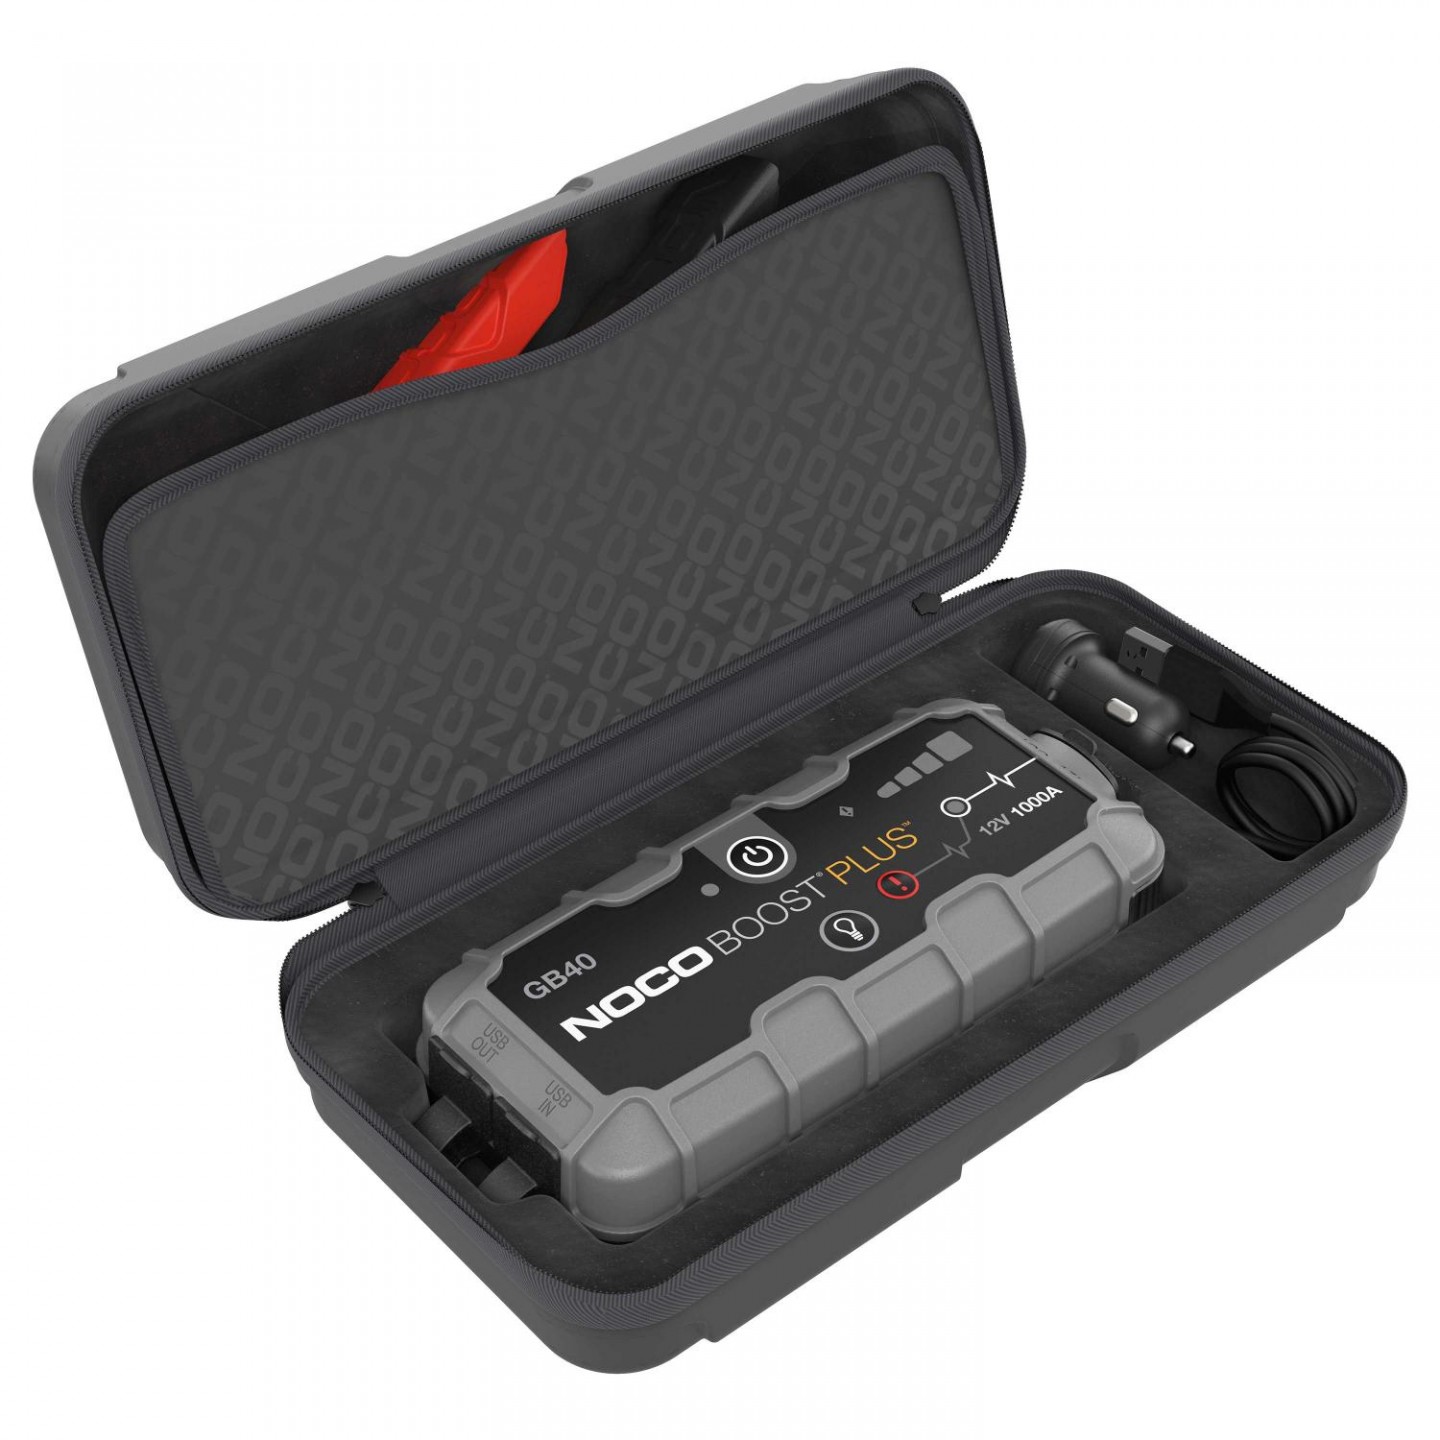 Noco Boost Plus GB40 jump starter + GBC013 Case combi